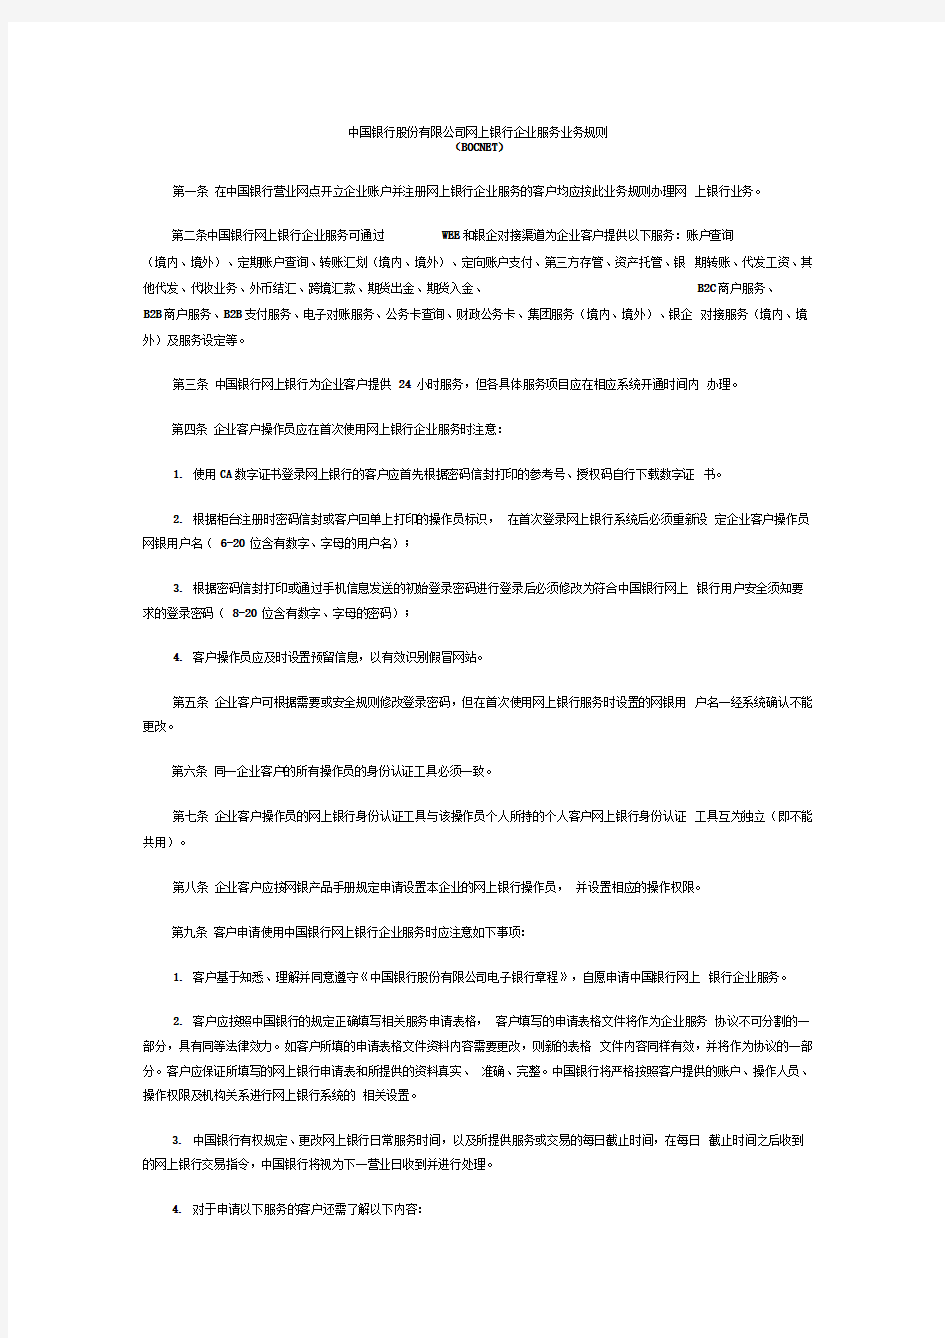 xxxx0217中国银行股份有限公司网上银行企业服务业务规则doc-中国